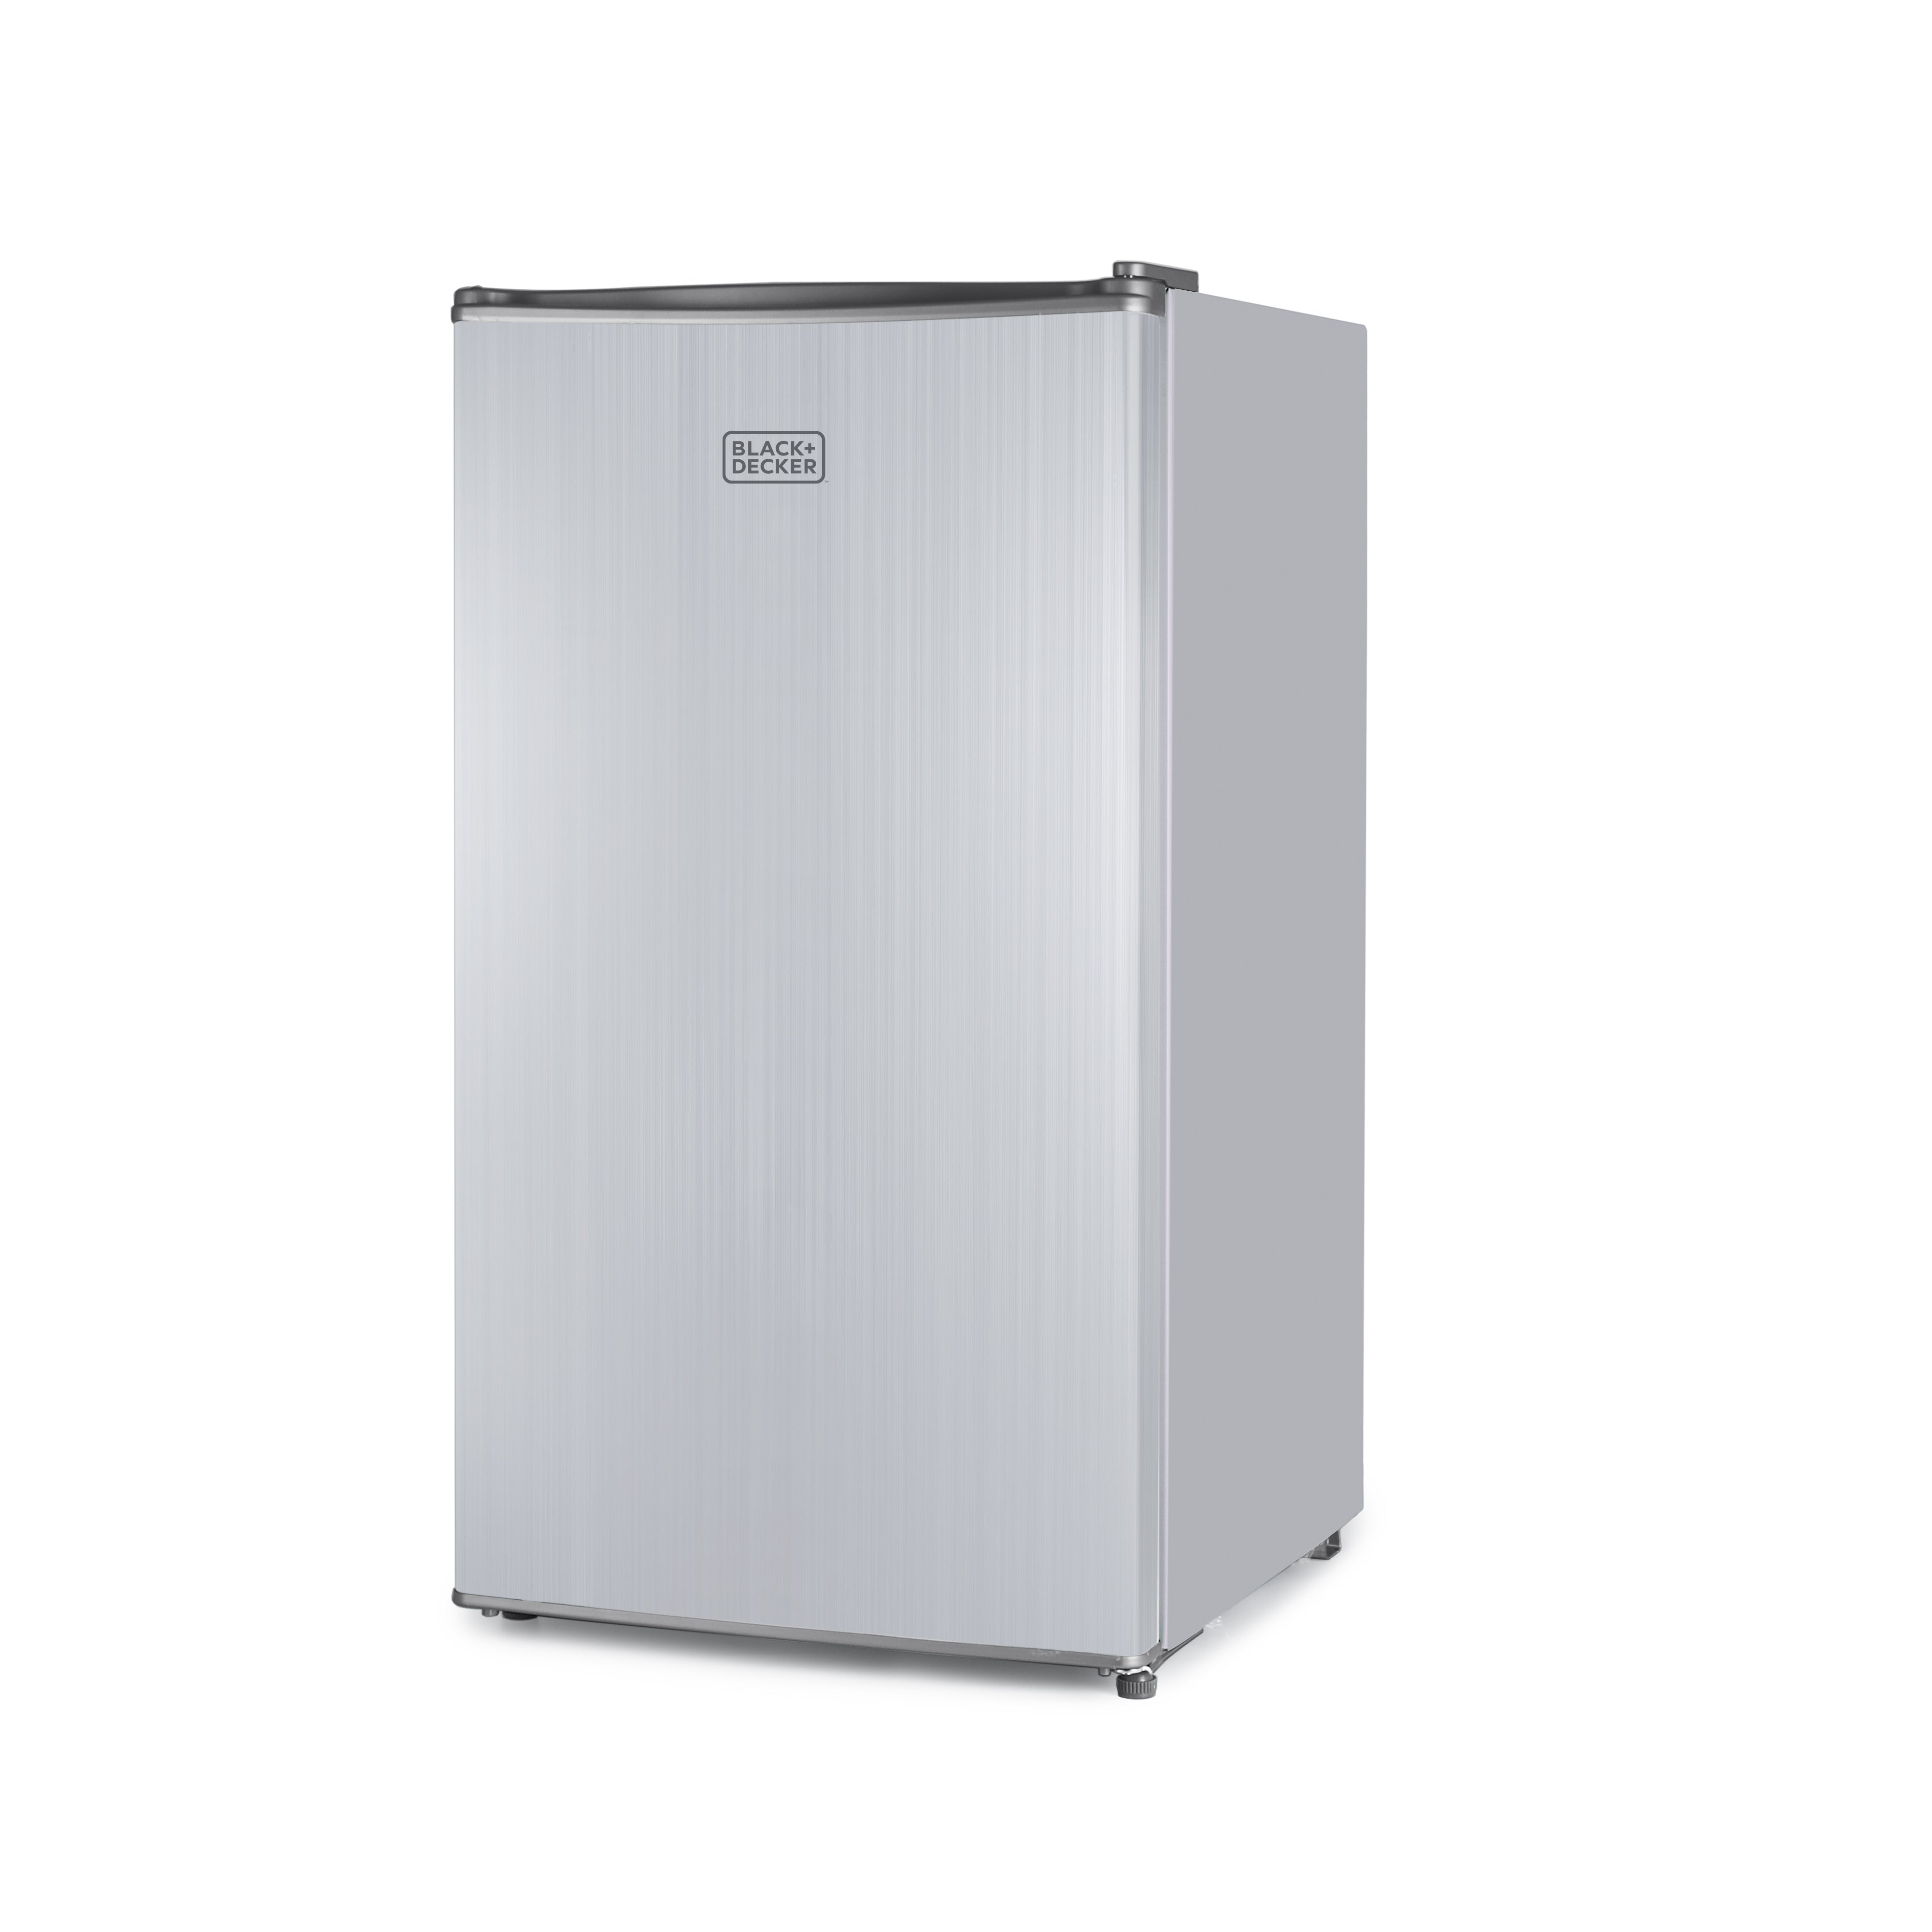 BLACK+DECKER Compact Refrigerator 3.2 Cu. Ft. with True Freezer, Silver